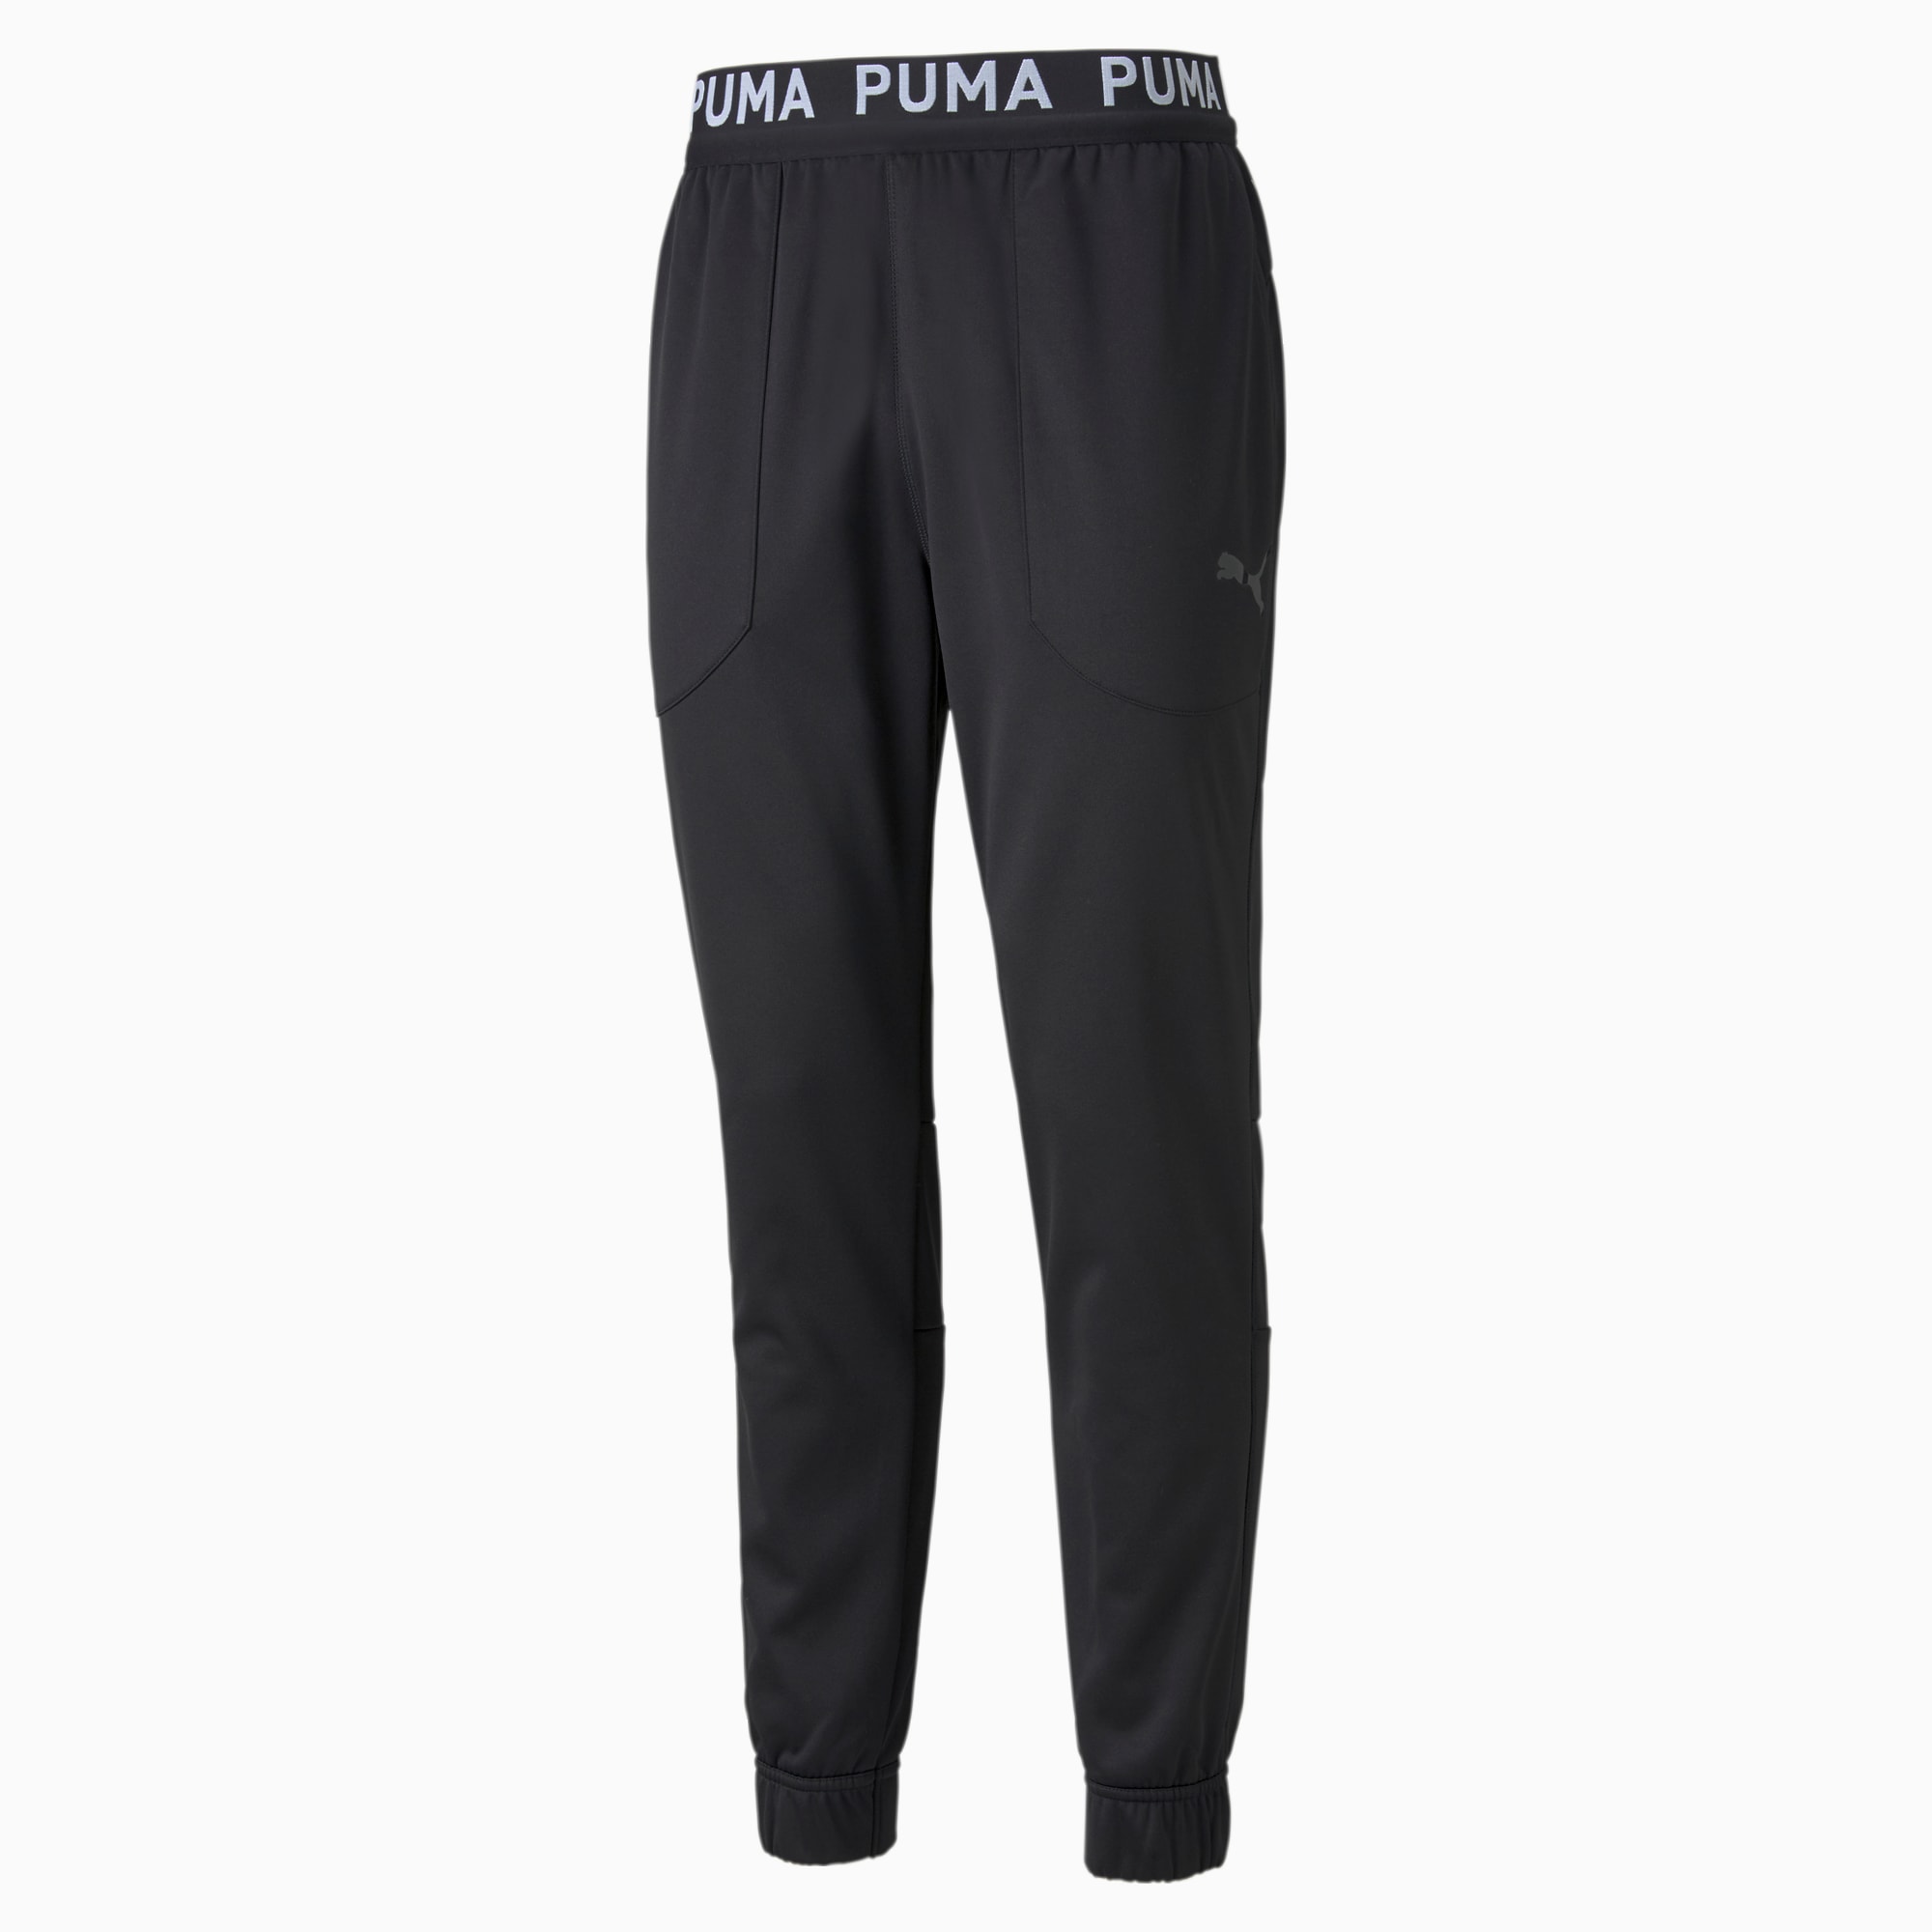 individualFINAL Football Training Pants Men, PUMA Shop All Puma